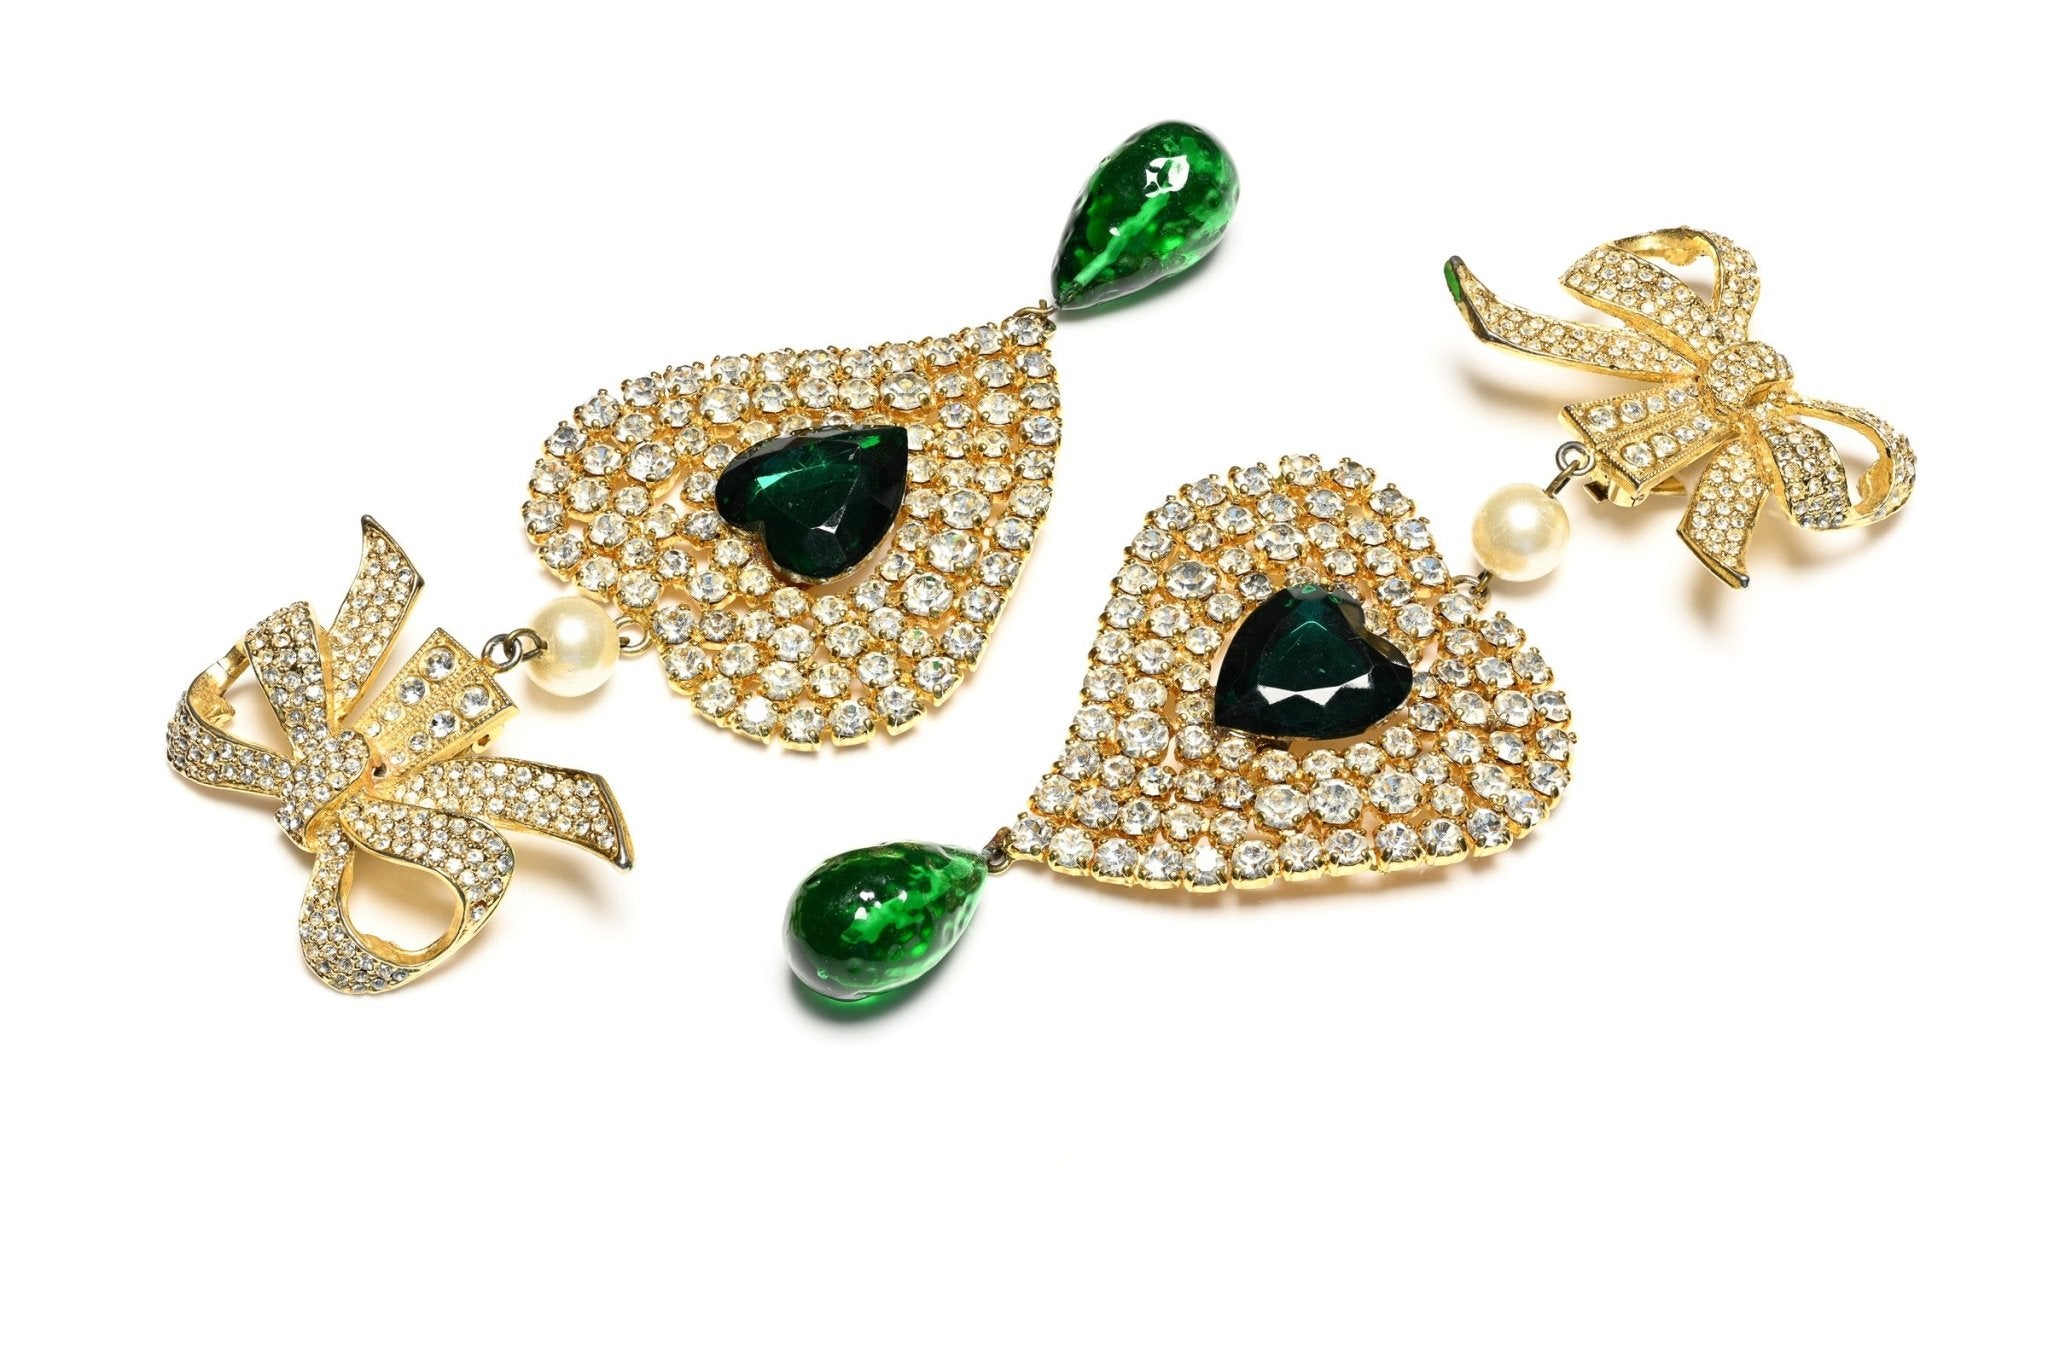 Vintage Rena Lange Paris Gripoix Green Glass Heart Bow Shoulder Duster Earrings